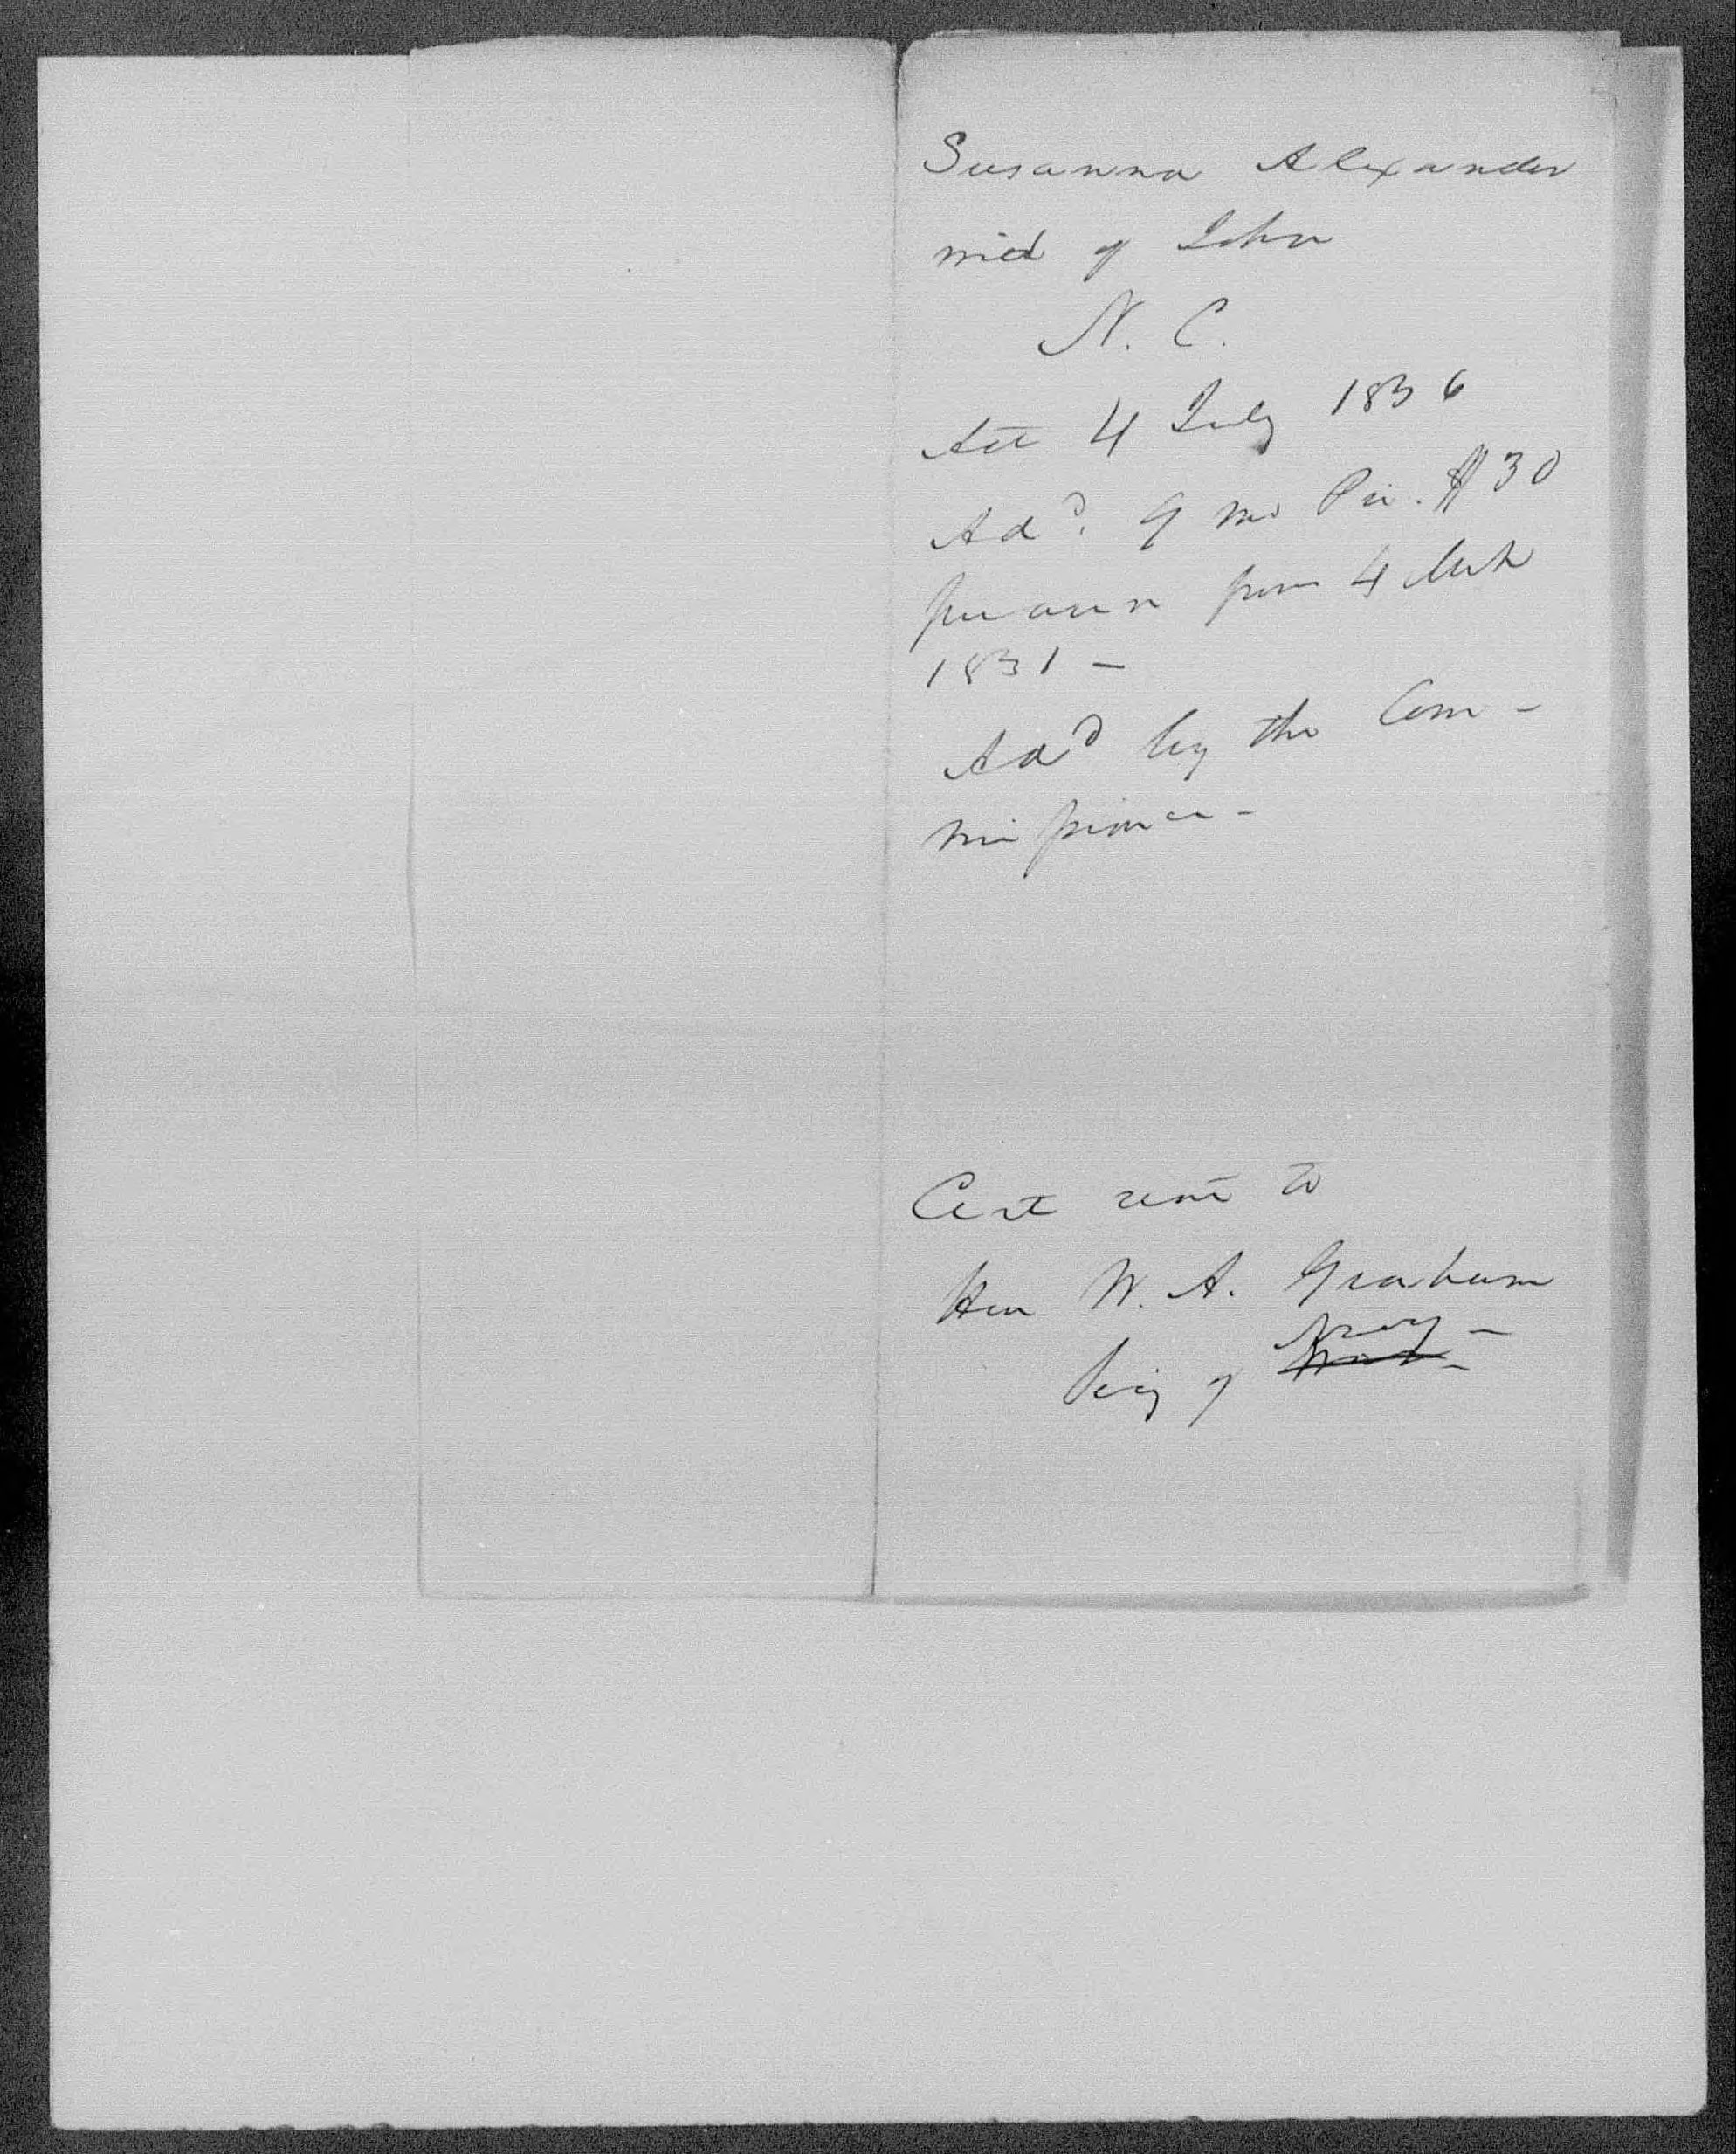 Affidavit of James W. Osborne in support of a Pension Claim for Susana Alexander, 25 September 1851, page 3